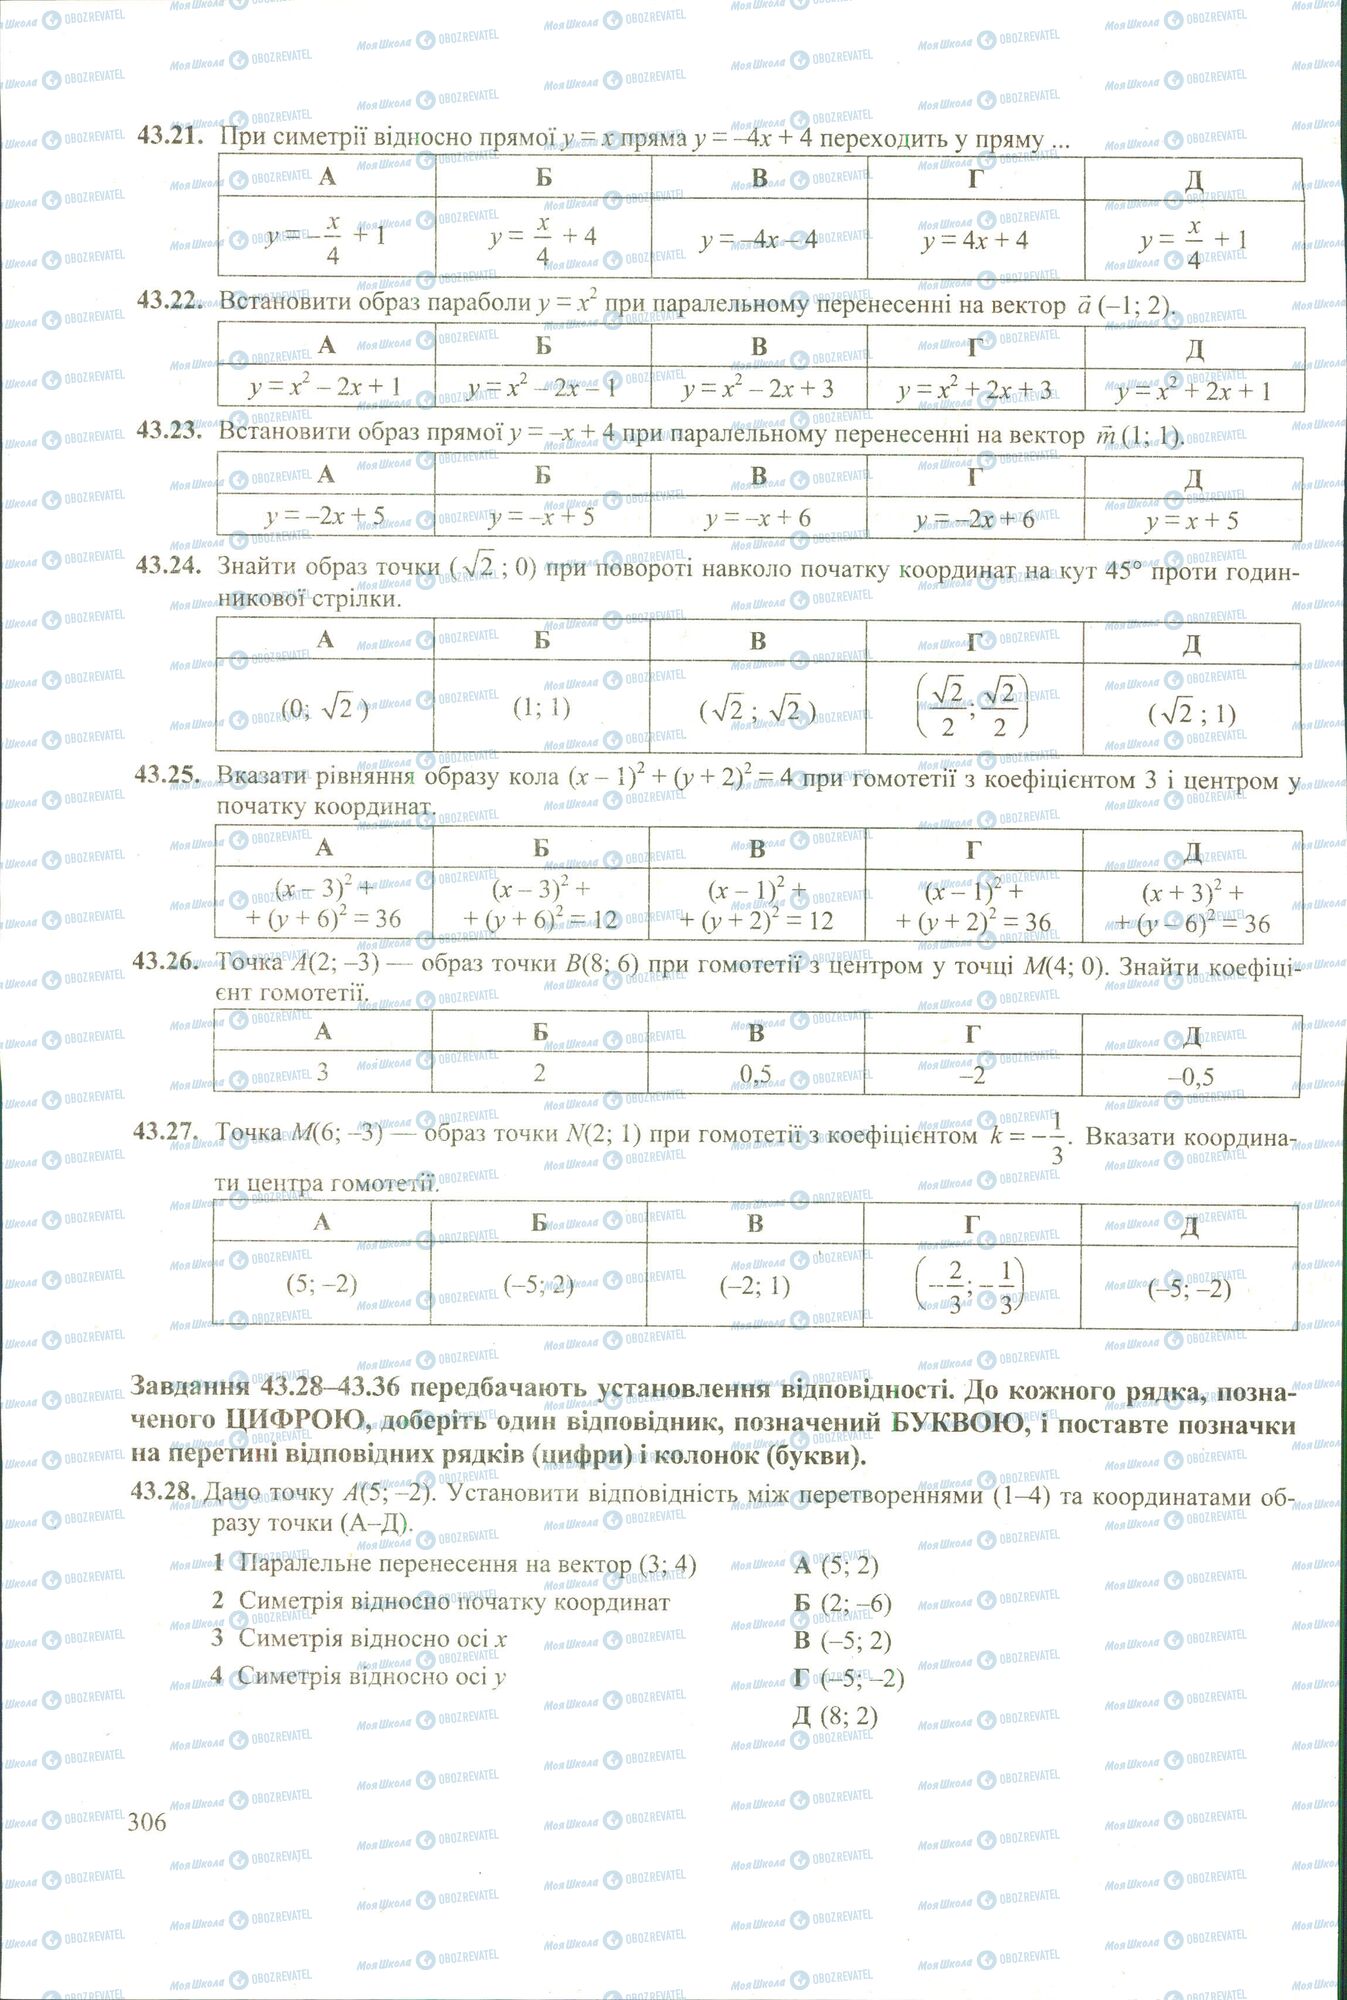 ЗНО Математика 11 класс страница 21-28